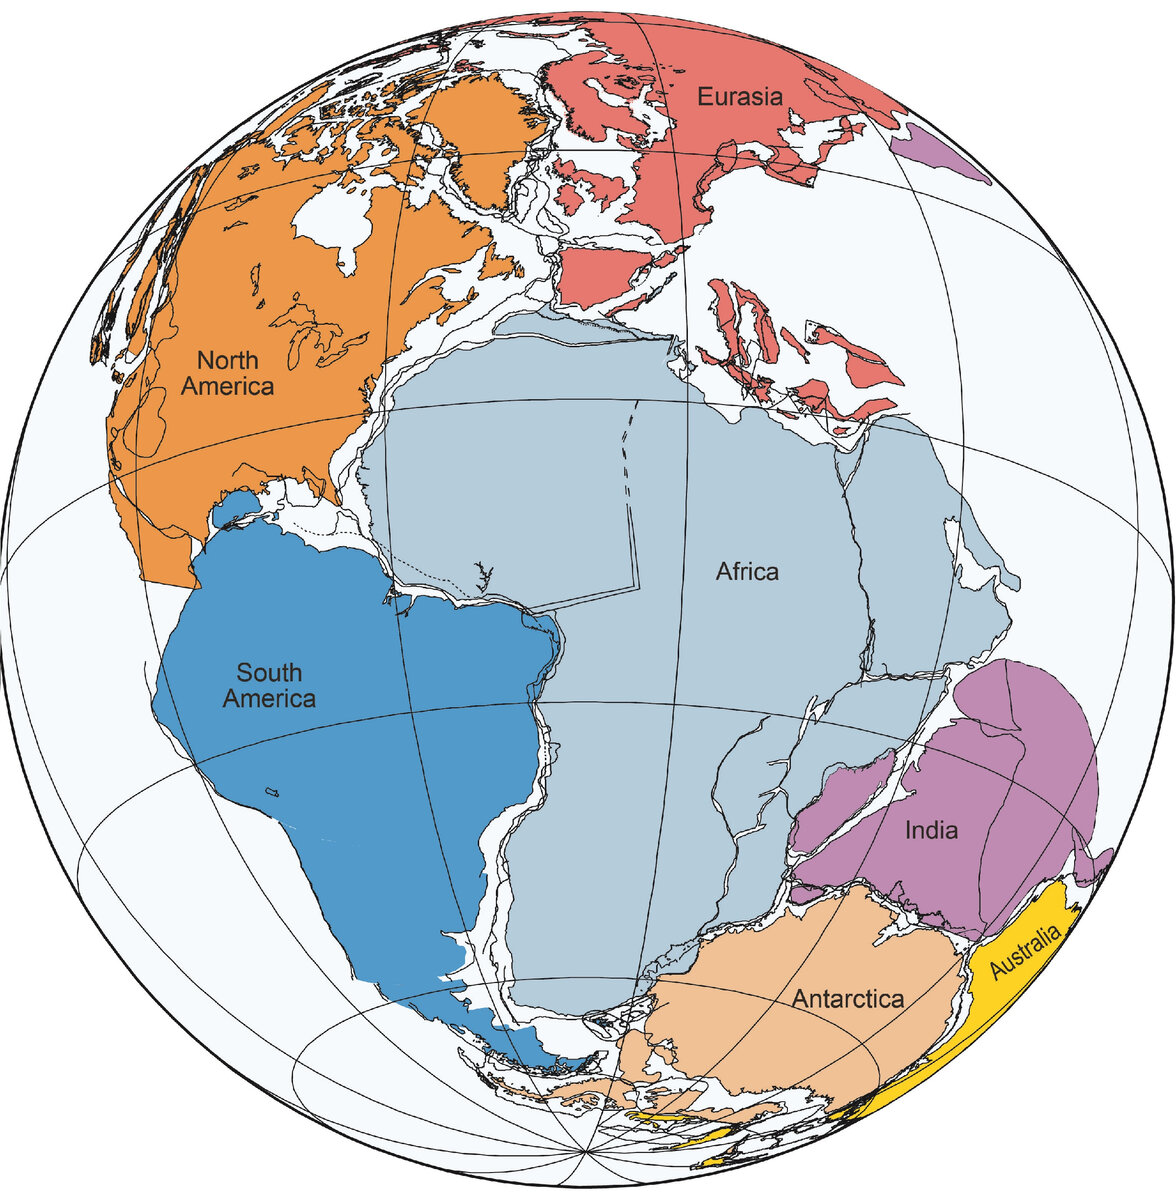 Континент Пангея 200 млн лет назад